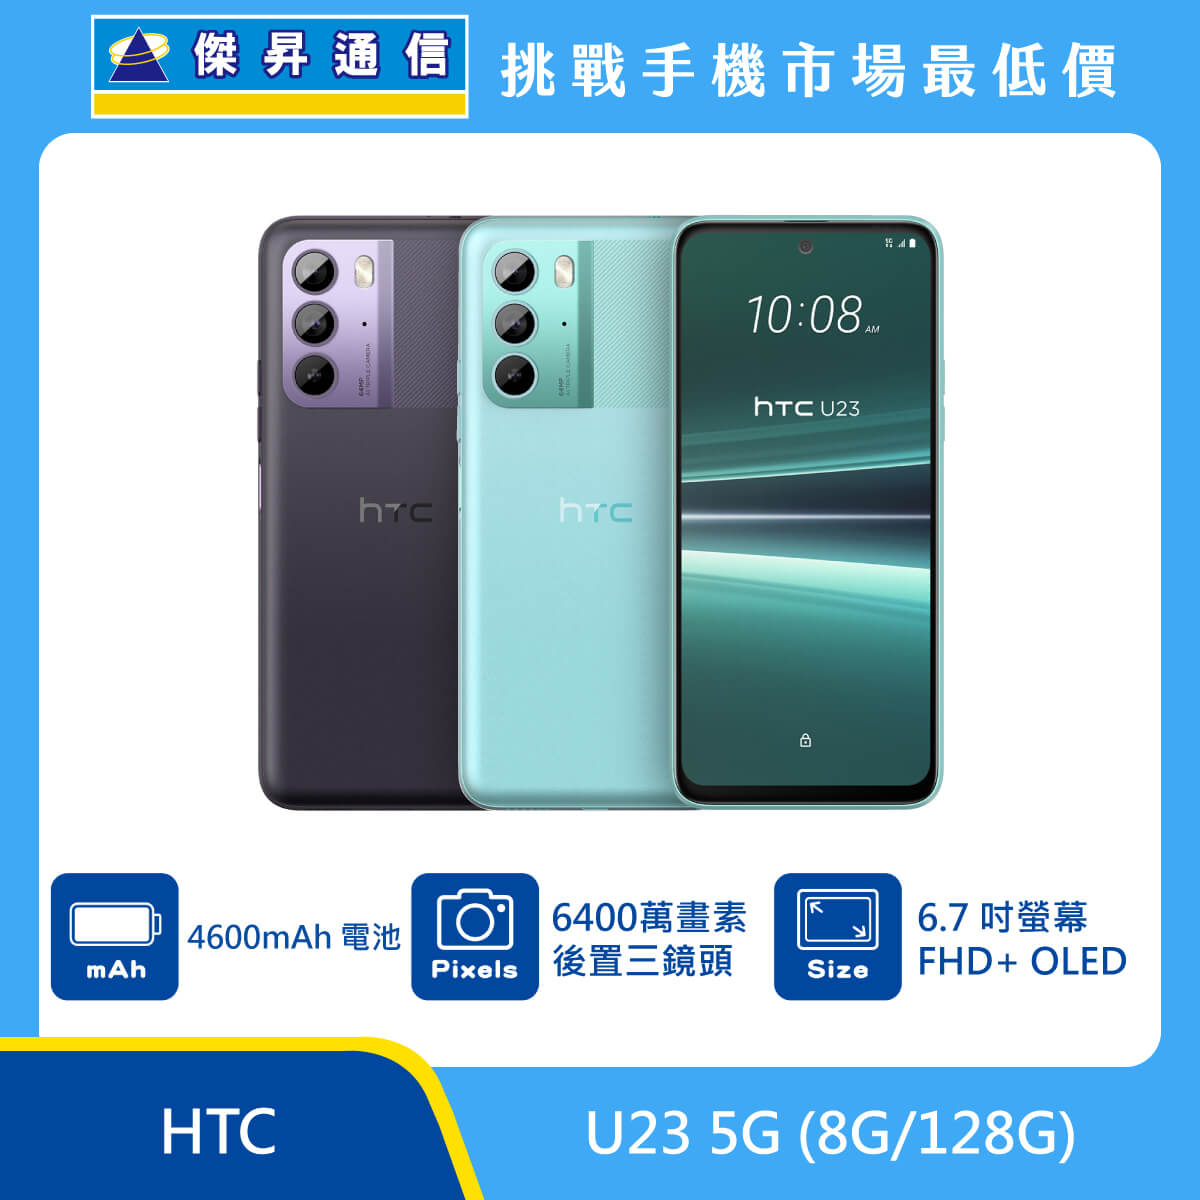 HTC U23 (8G/128G)